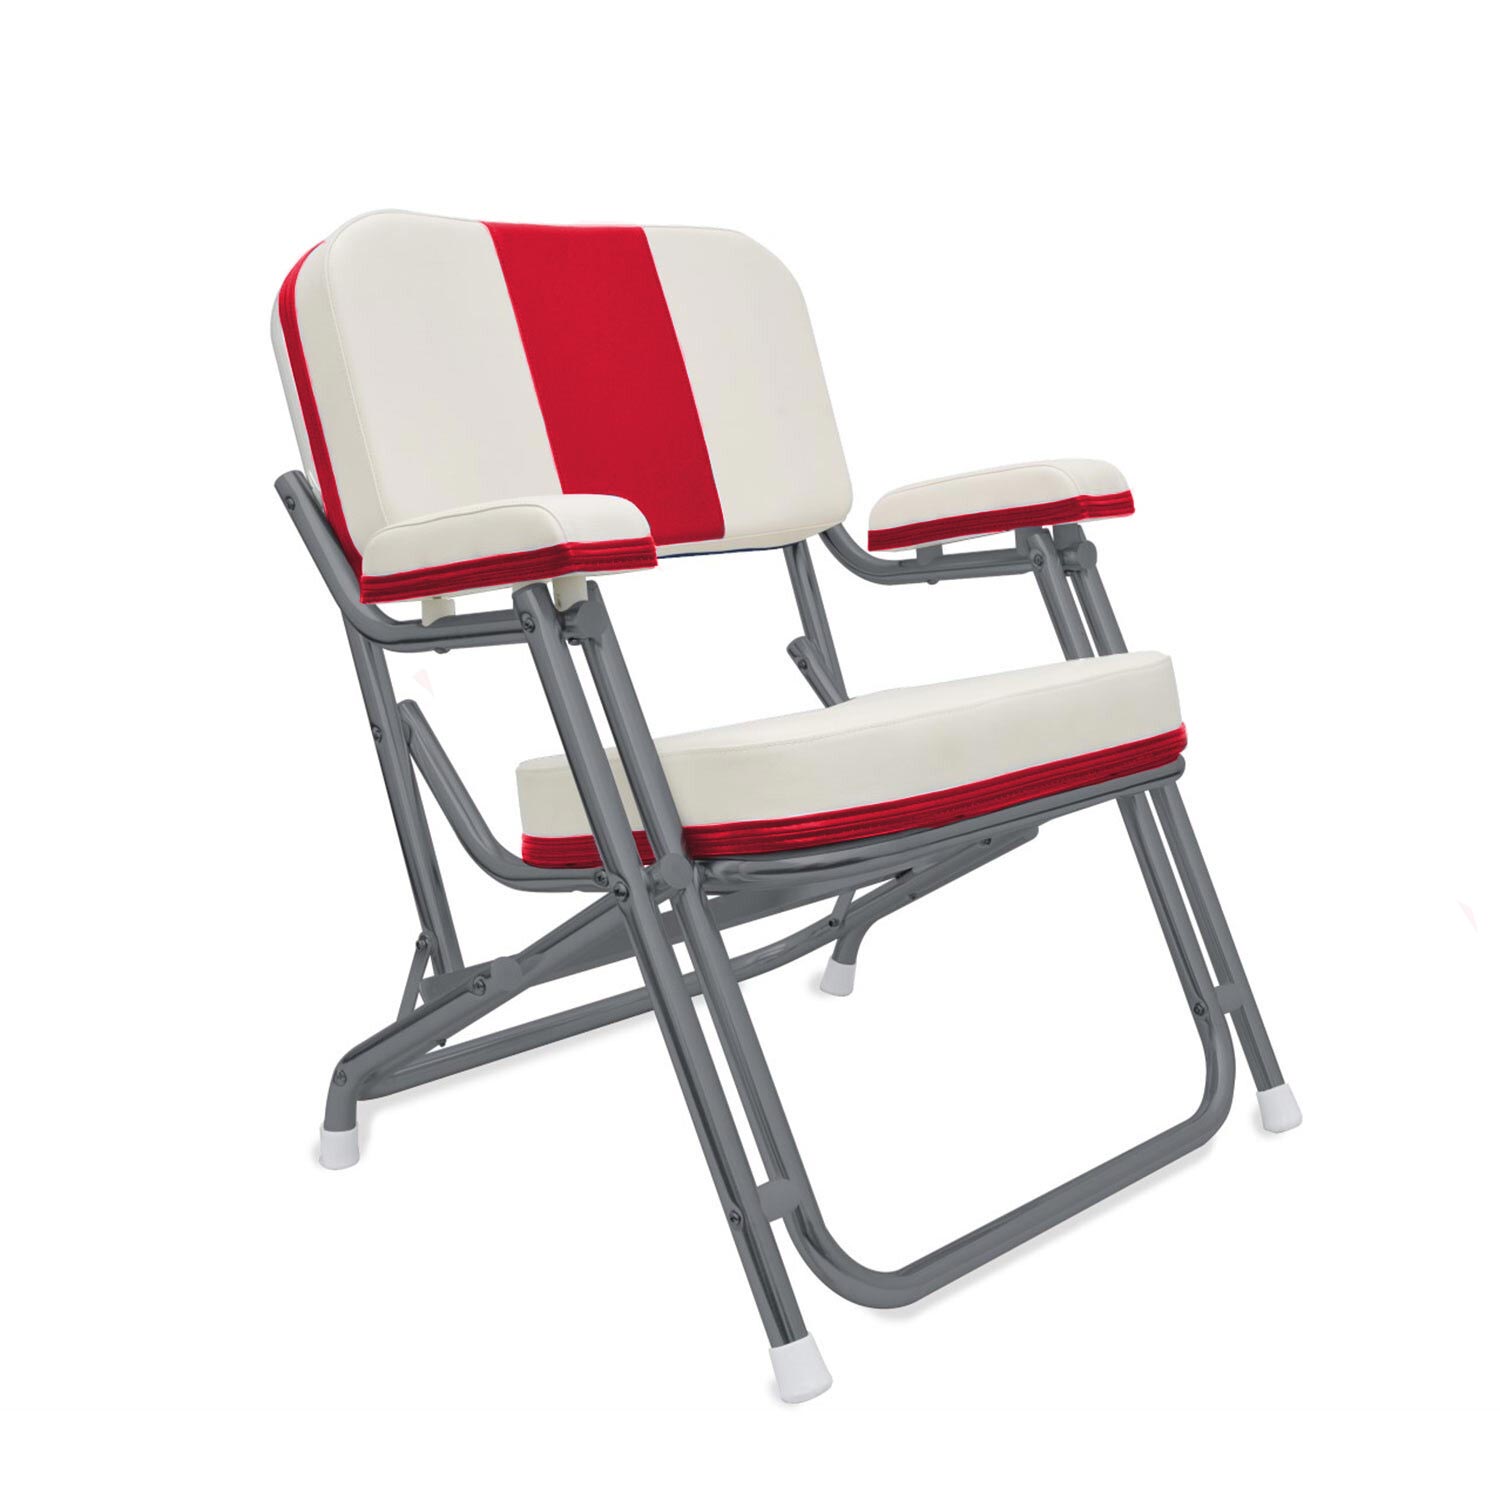 WEST MARINE Kingfish II Deck Chair, Red Back, Powder-Coated Aluminum Frame